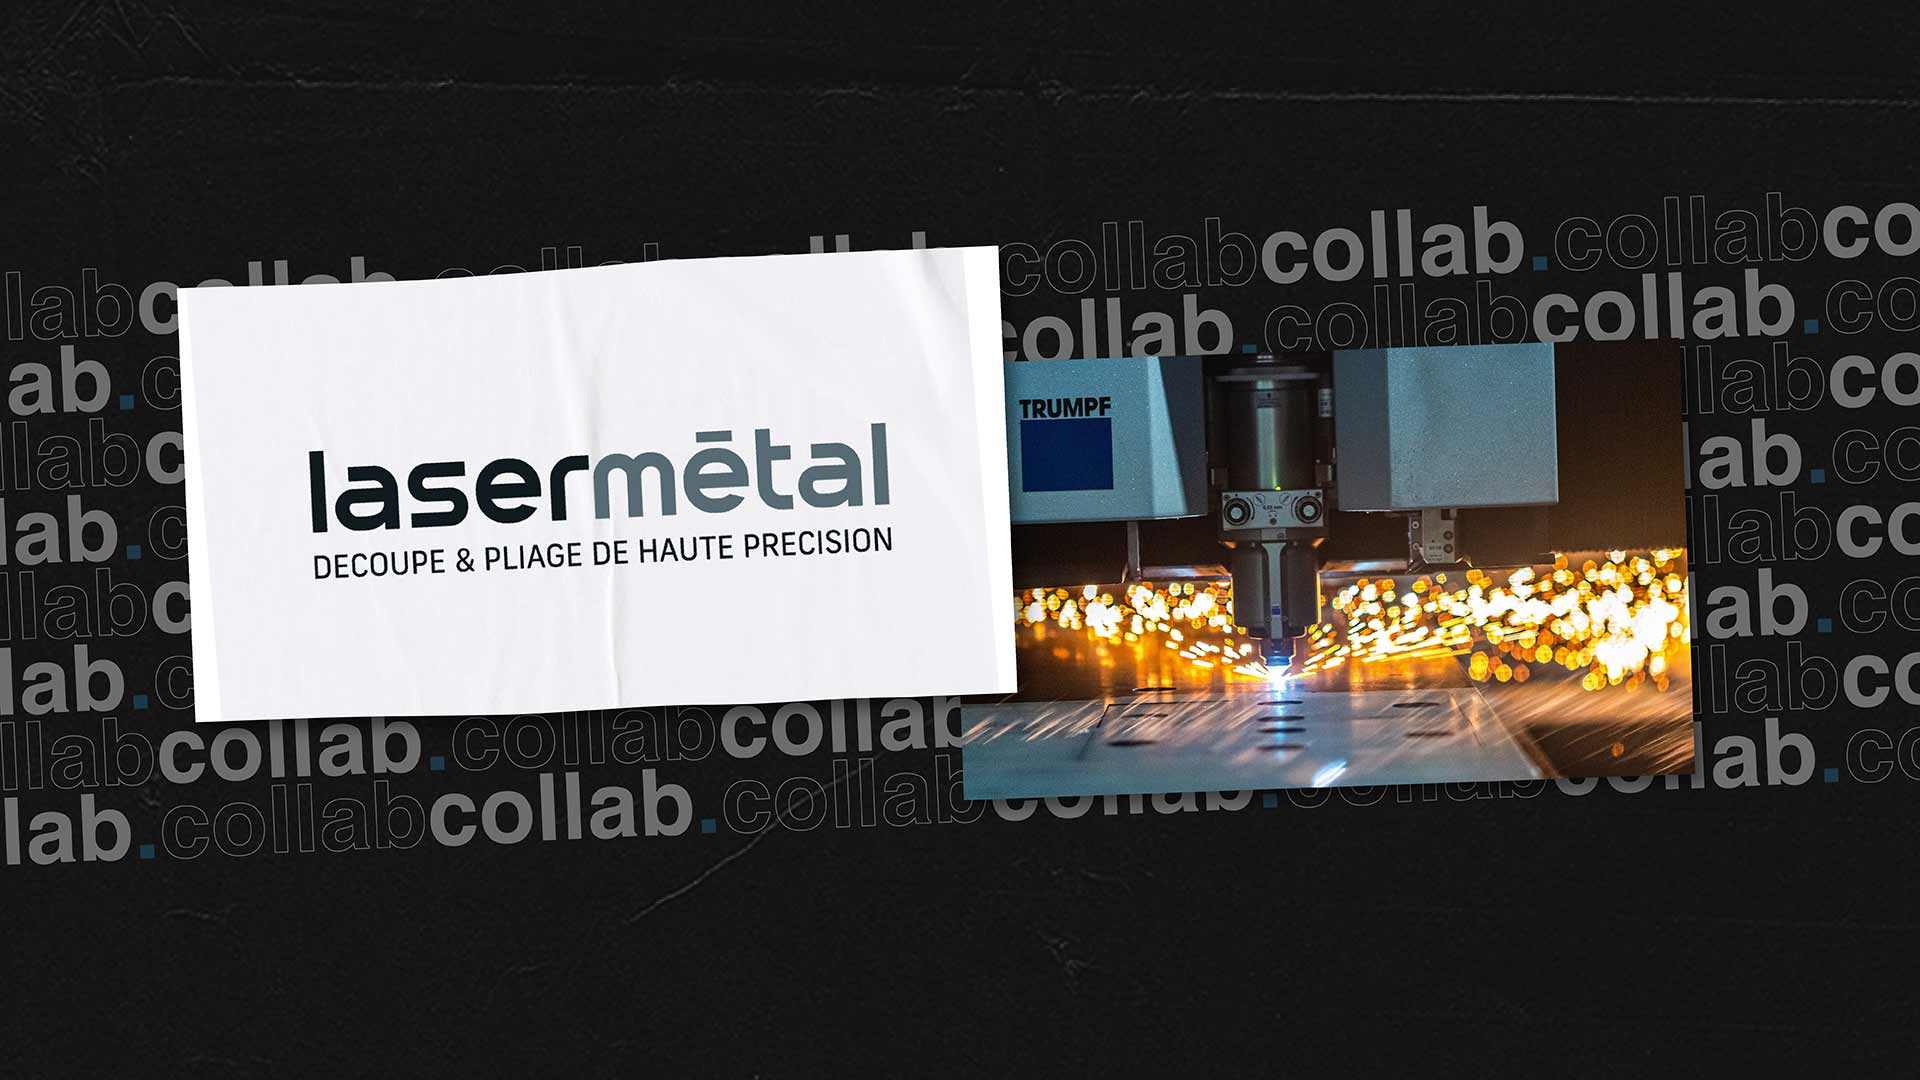 collaboration lasermetal